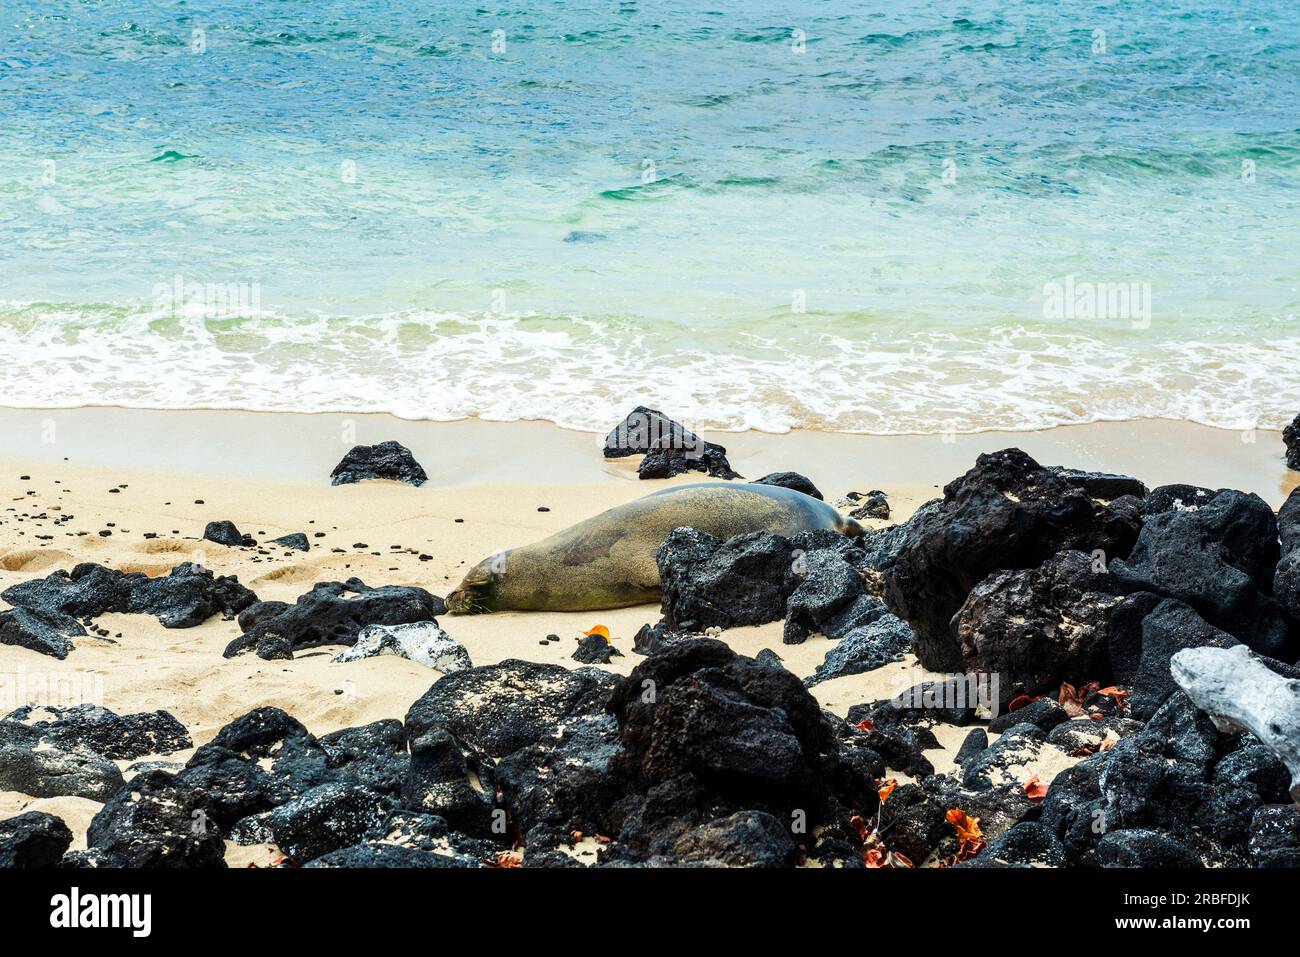 Hawaiian monk seal resting on a beach Stock Photo